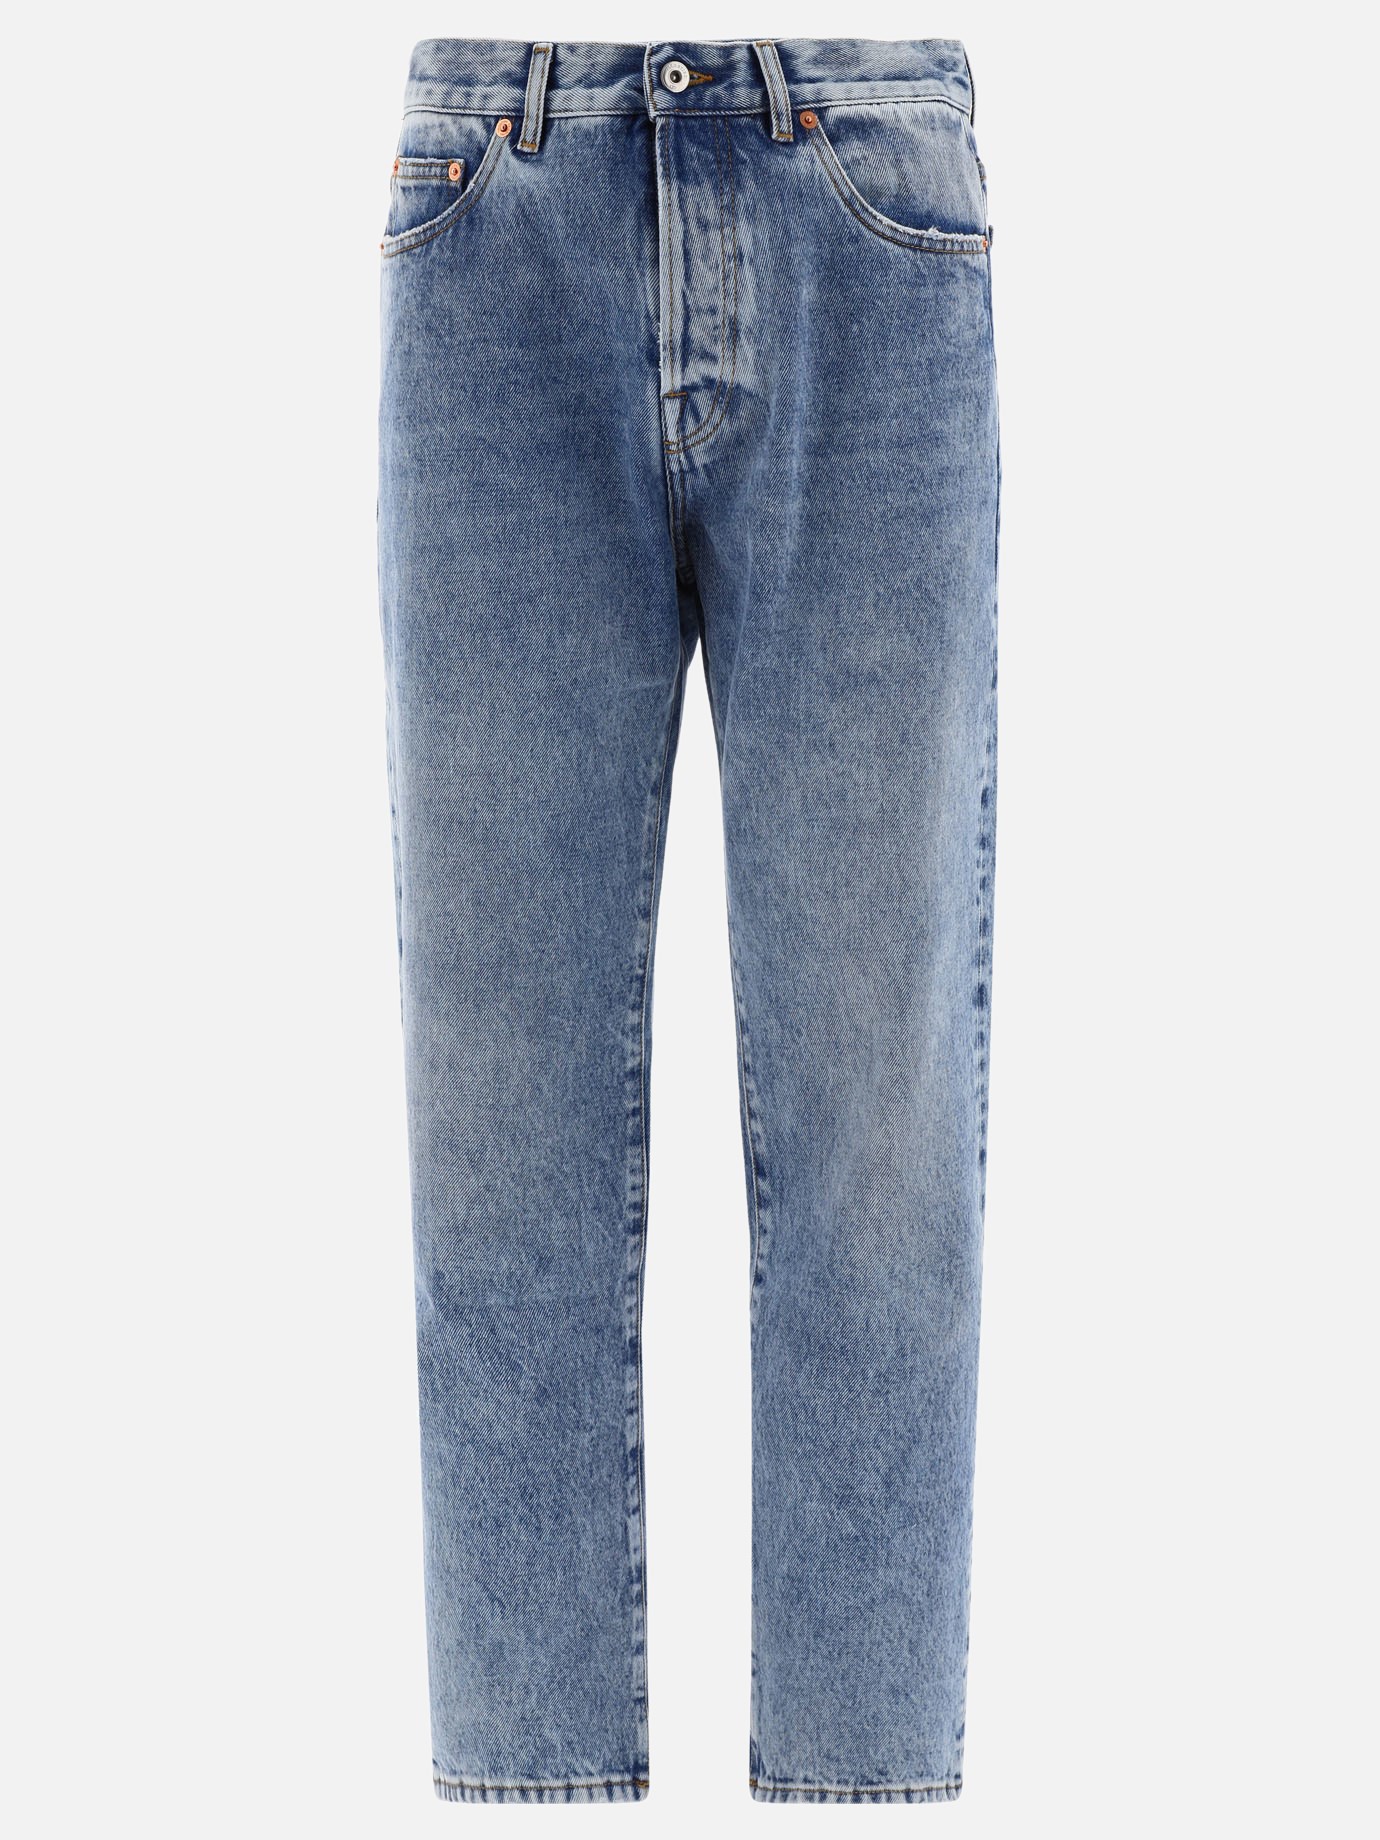  VLogo  jeans by Valentino